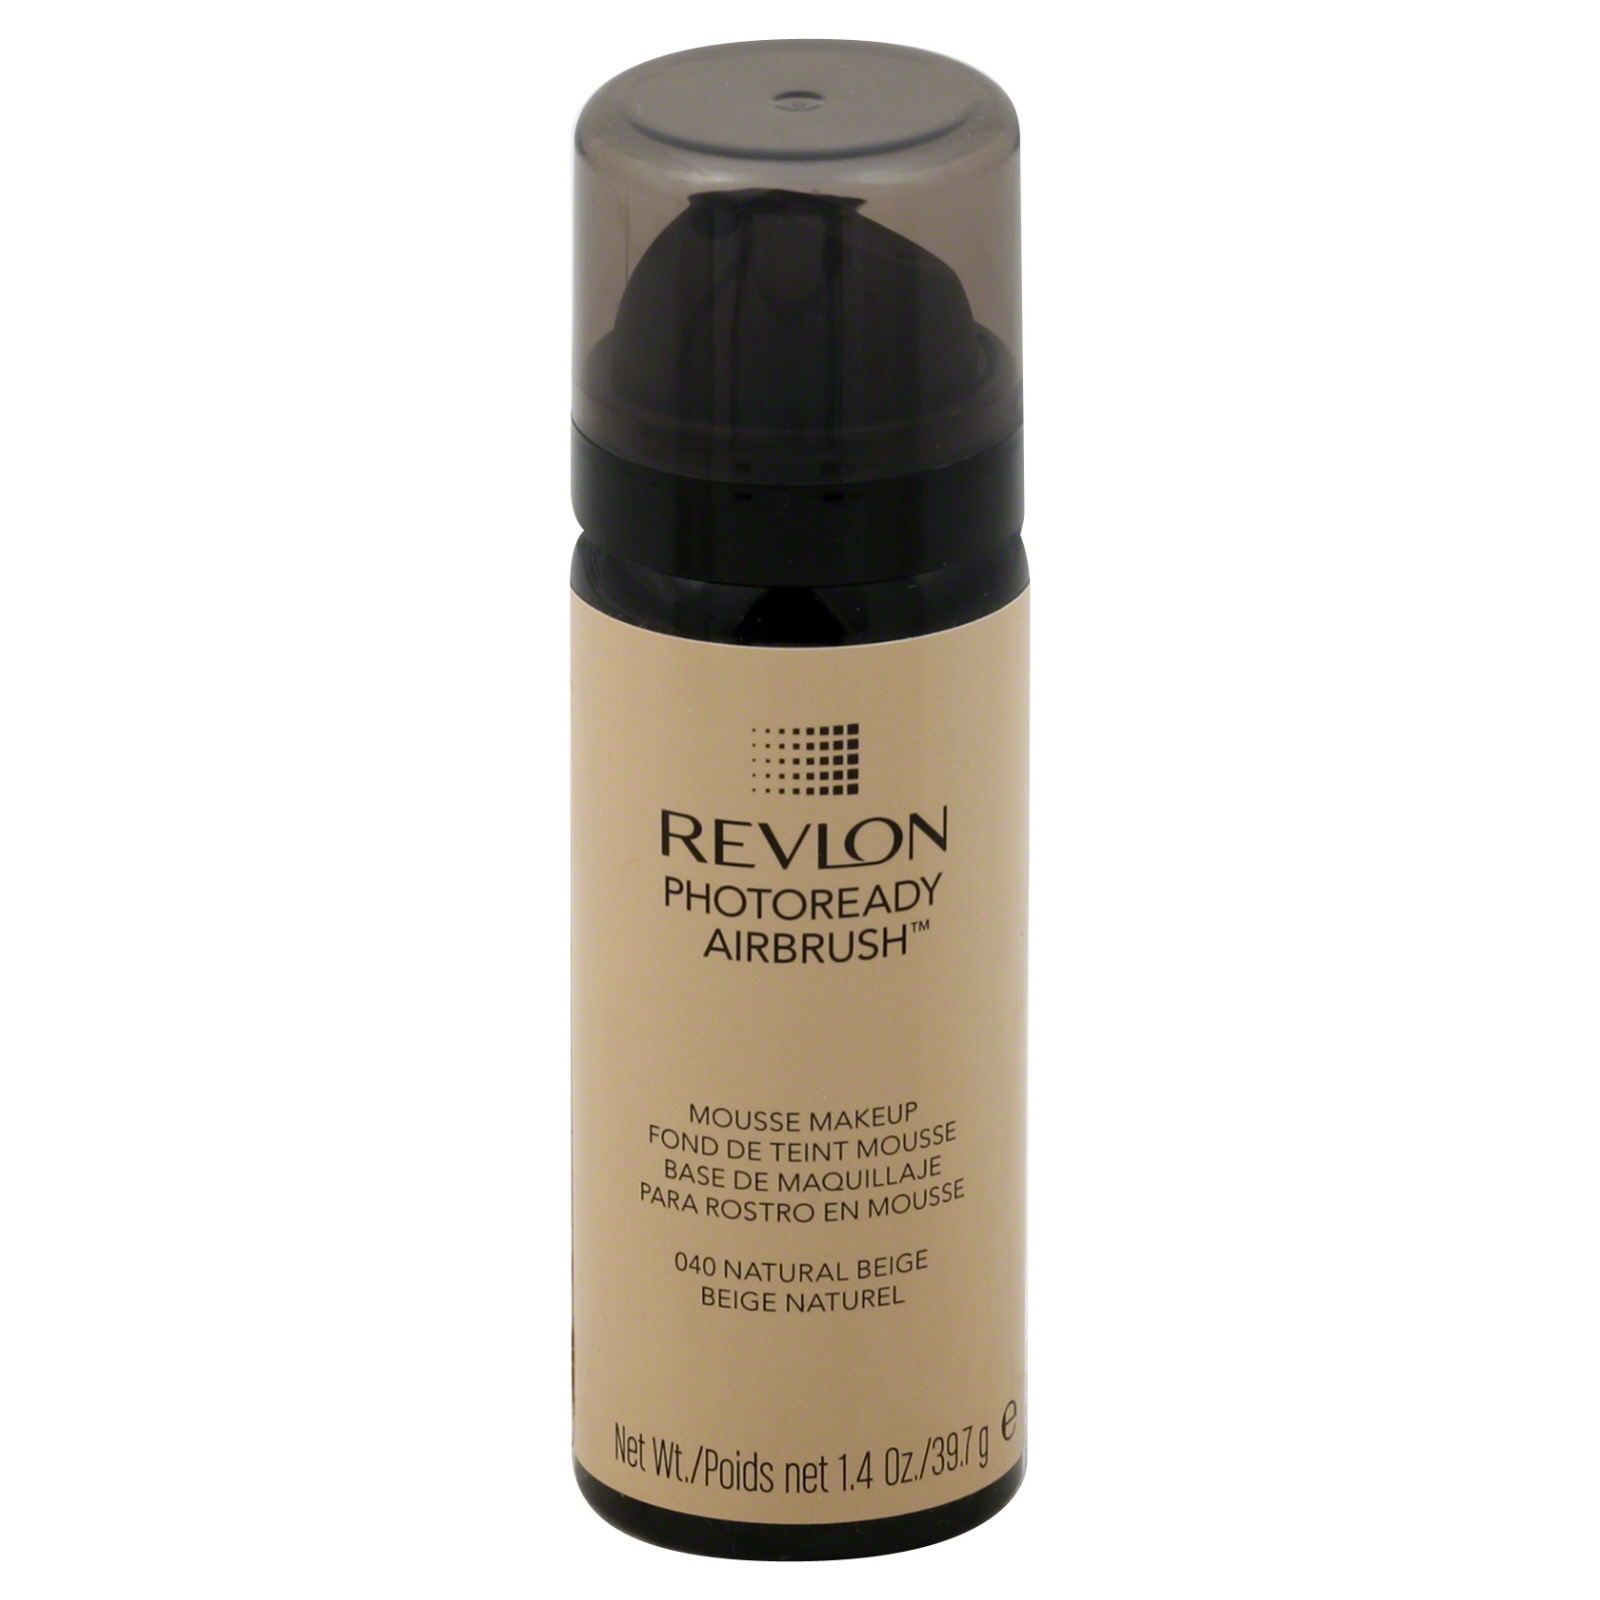 Revlon Photoready Airbrush Mousse Makeup Natural Beige 1.4 fl oz